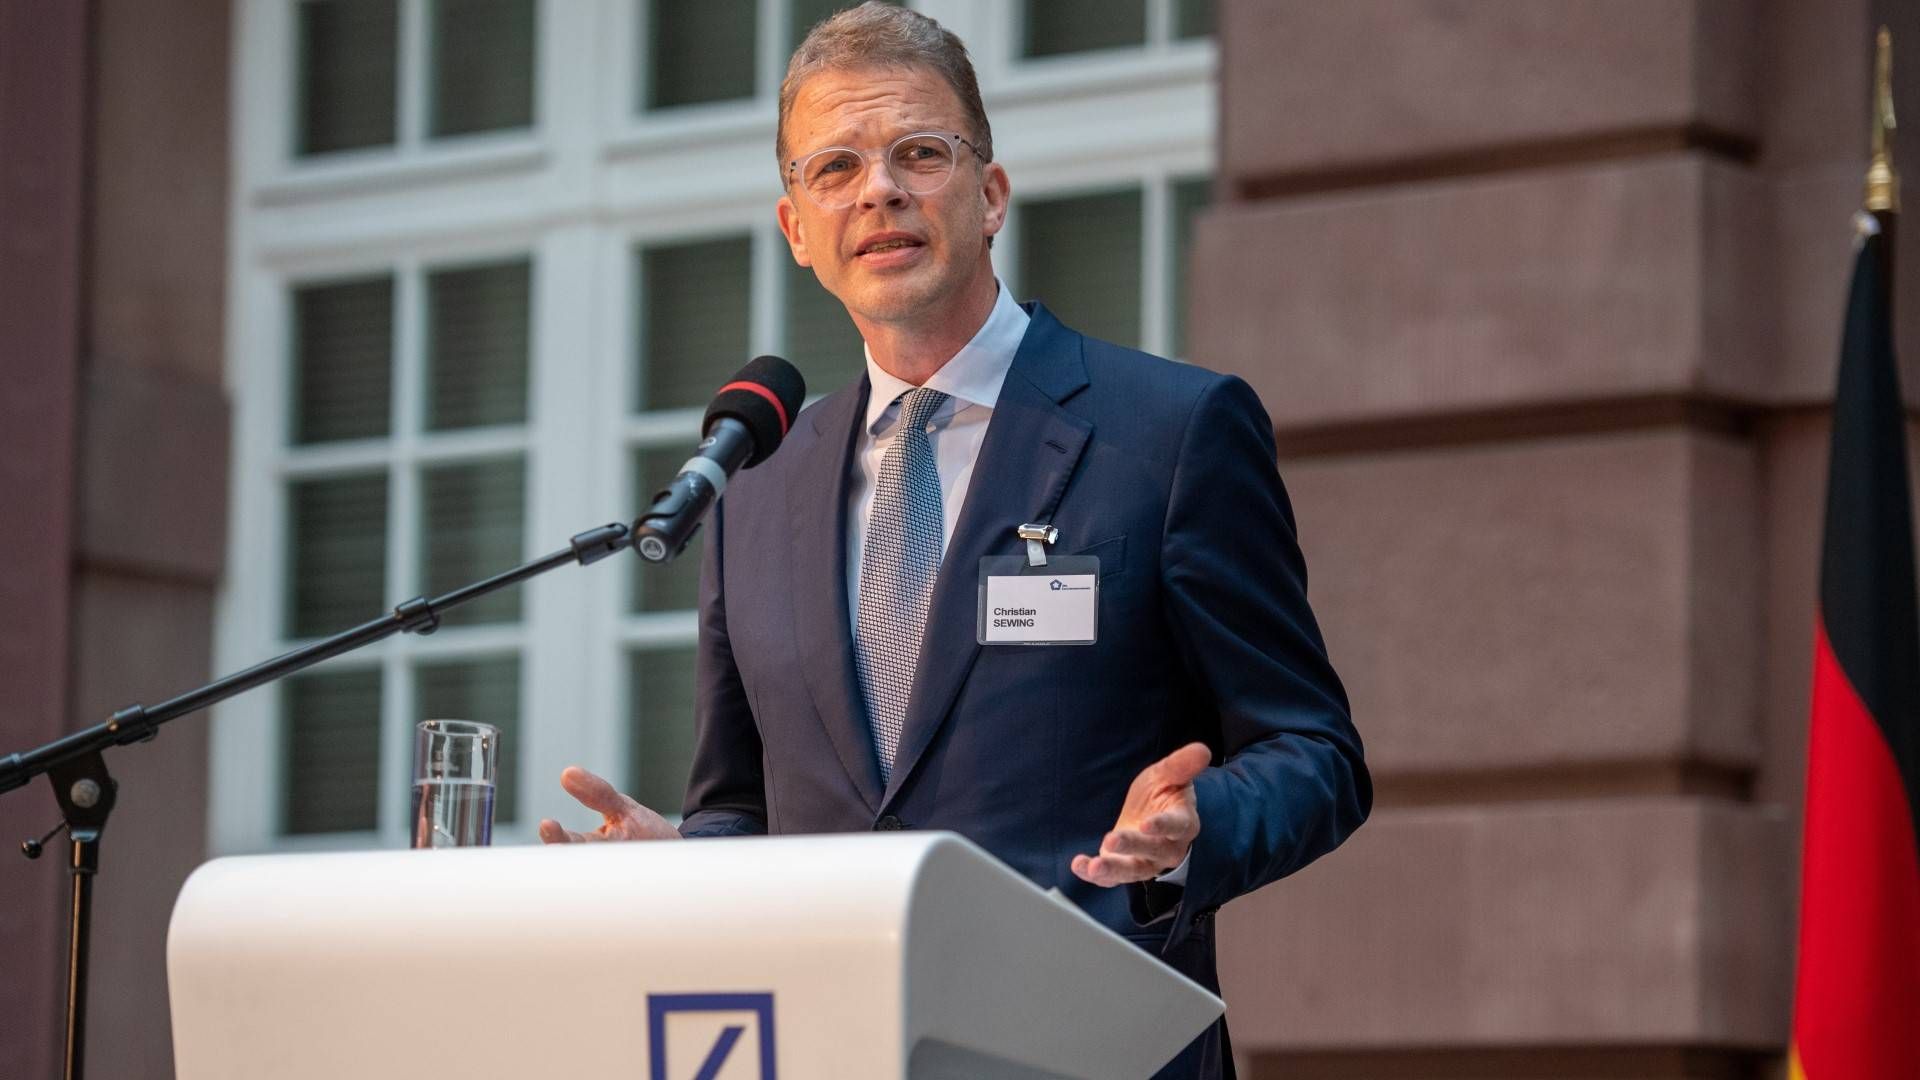 Deutsche-Bank-CEO Christian Sewing | Foto: picture alliance/dpa | Christophe Gateau